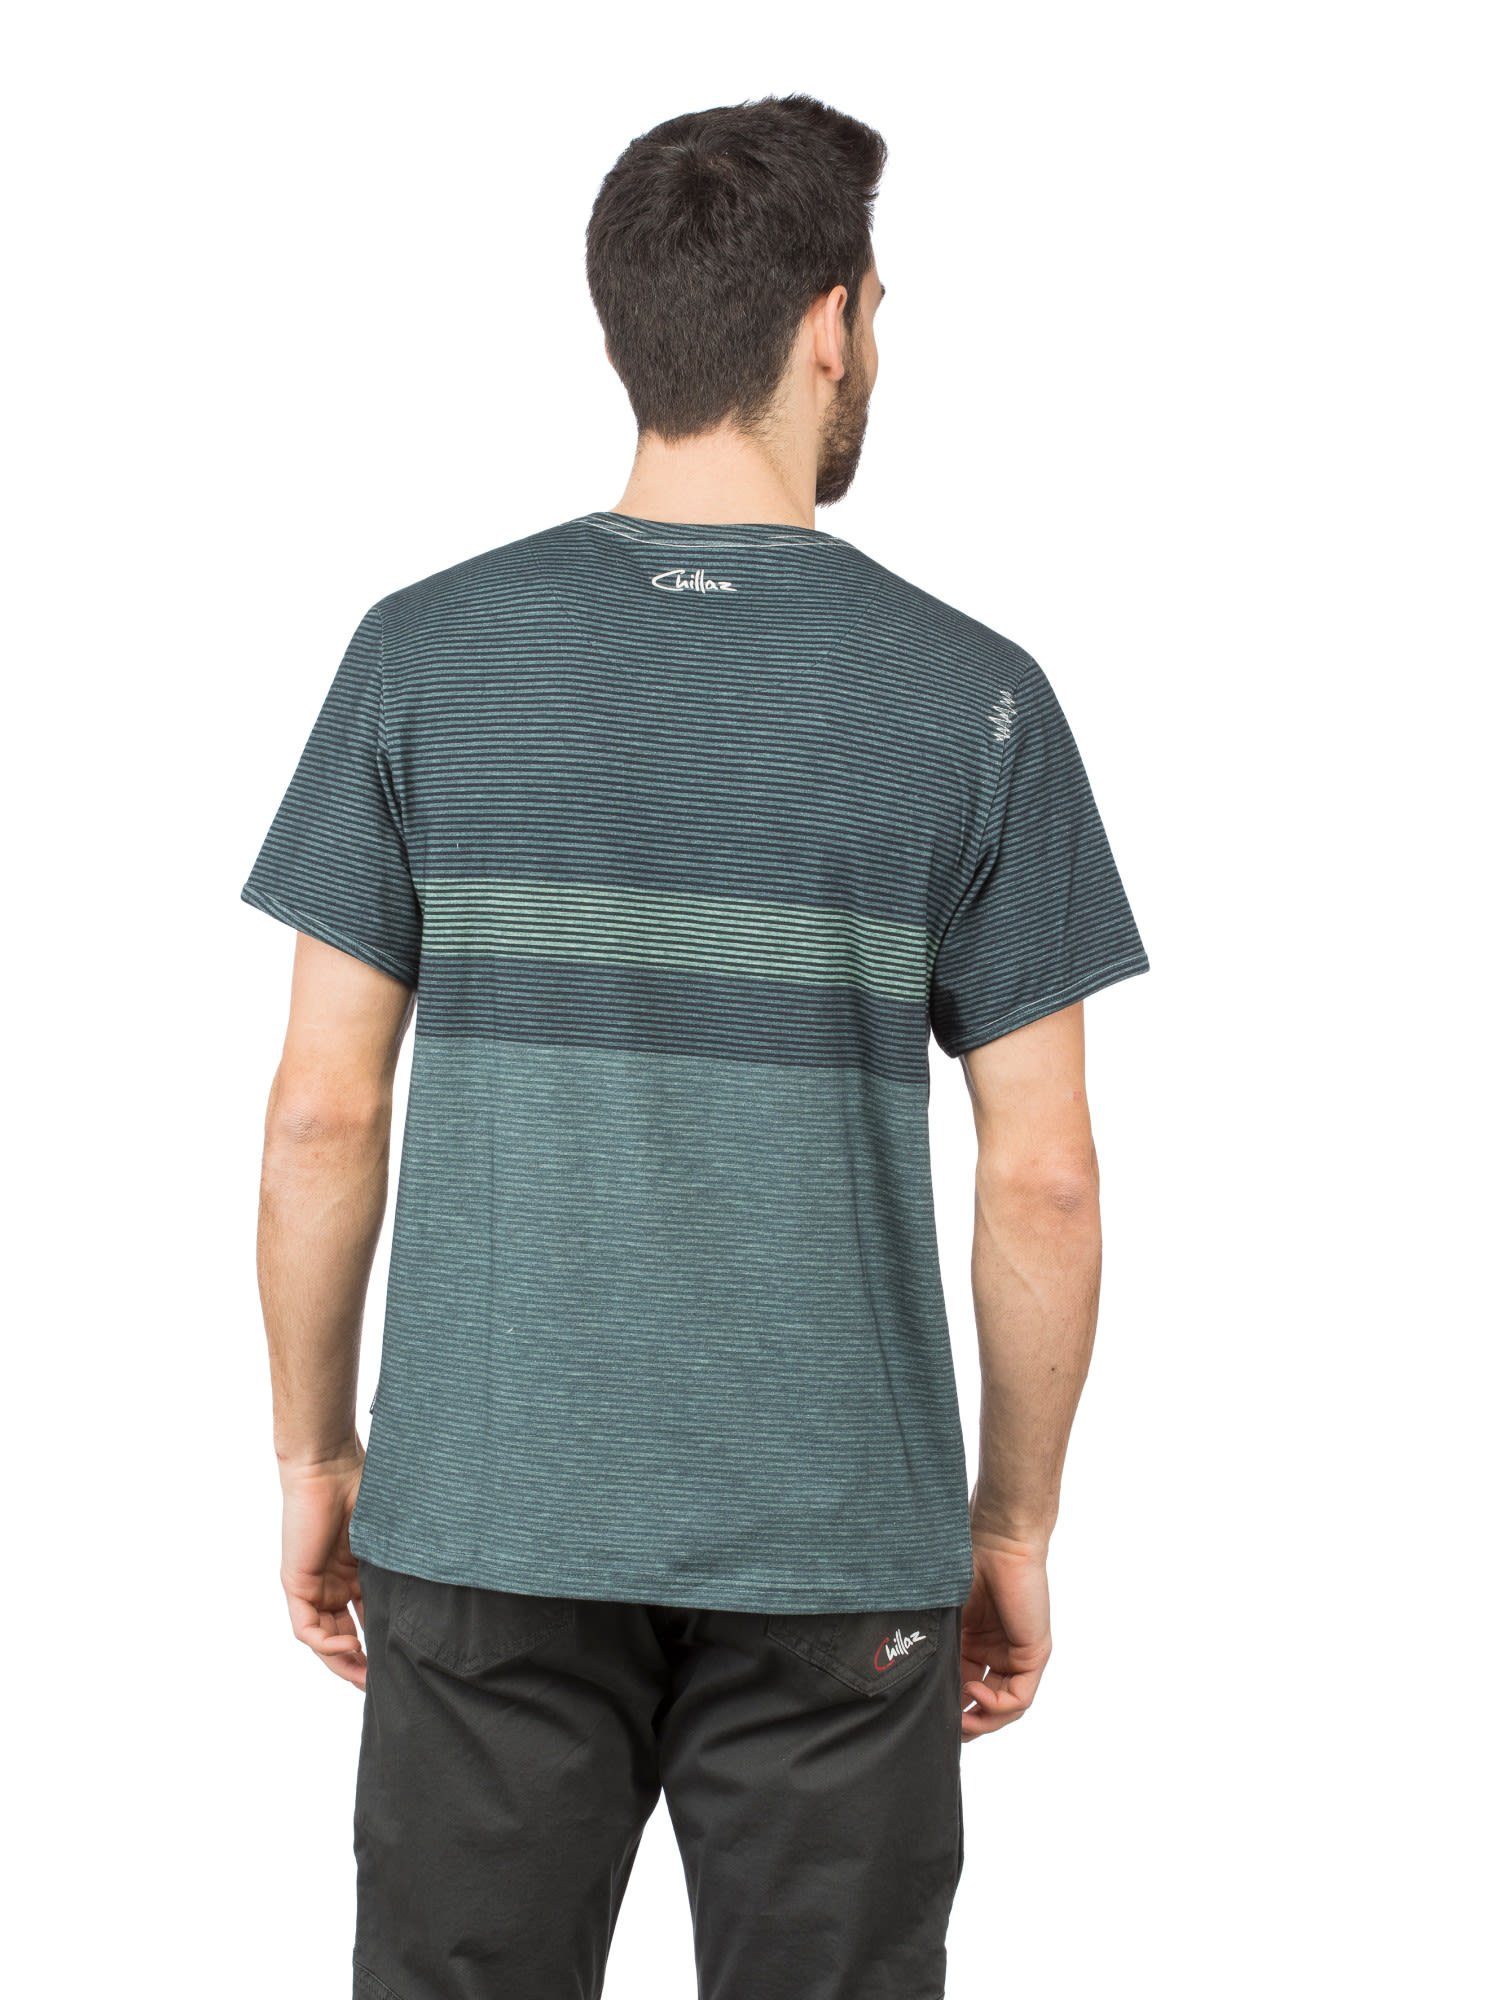 Chillaz Green Stripes T-shirt M Herren T-Shirt Chillaz Mountain